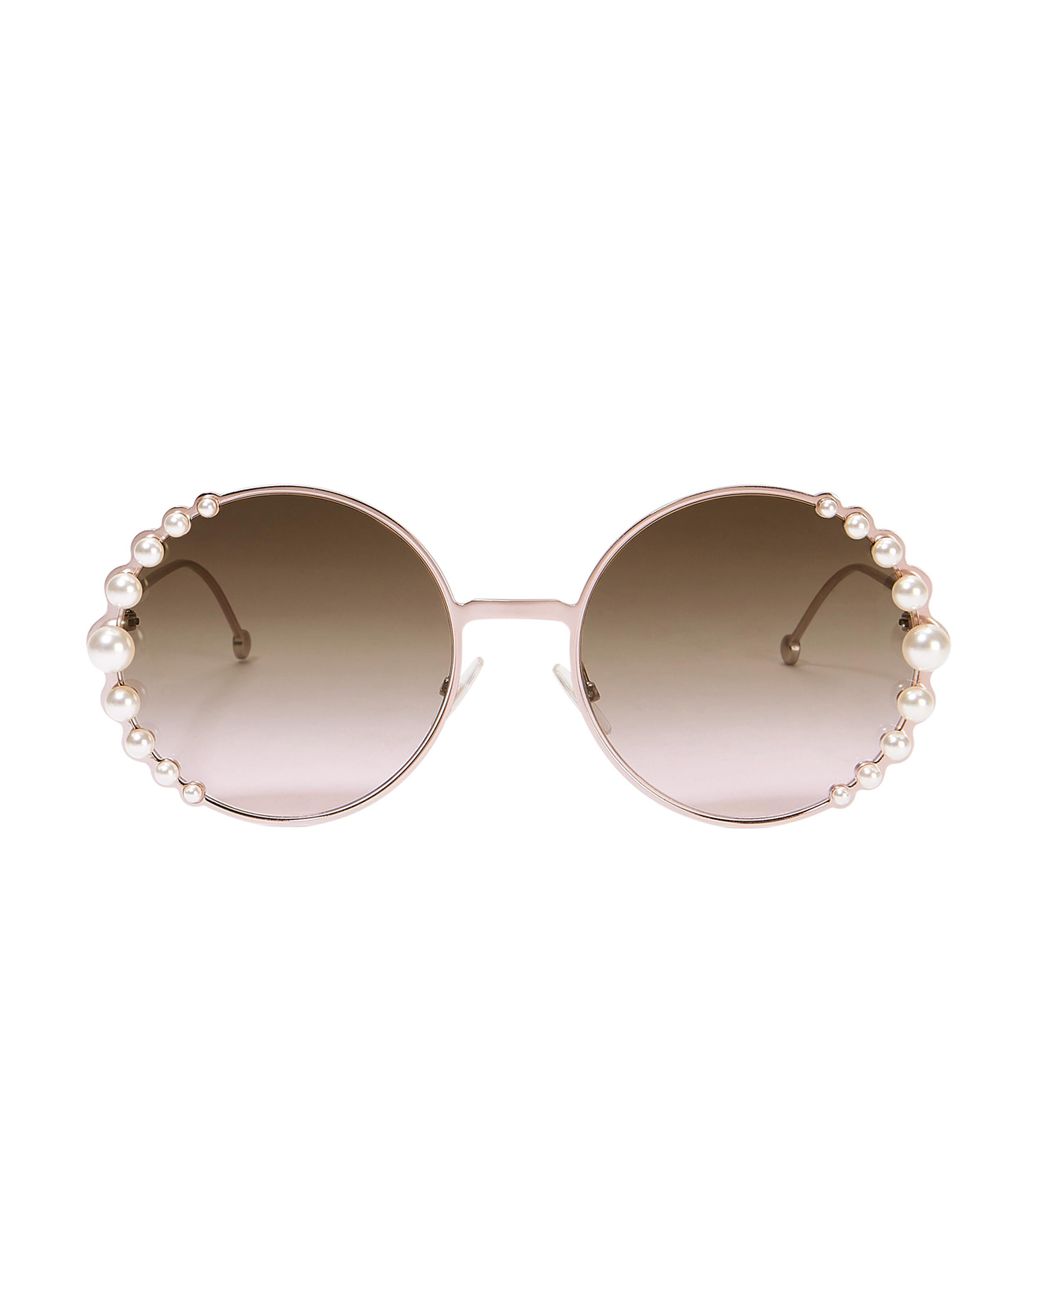  Fashion Rimless Pearl Sunglasses Womens Pink Brown